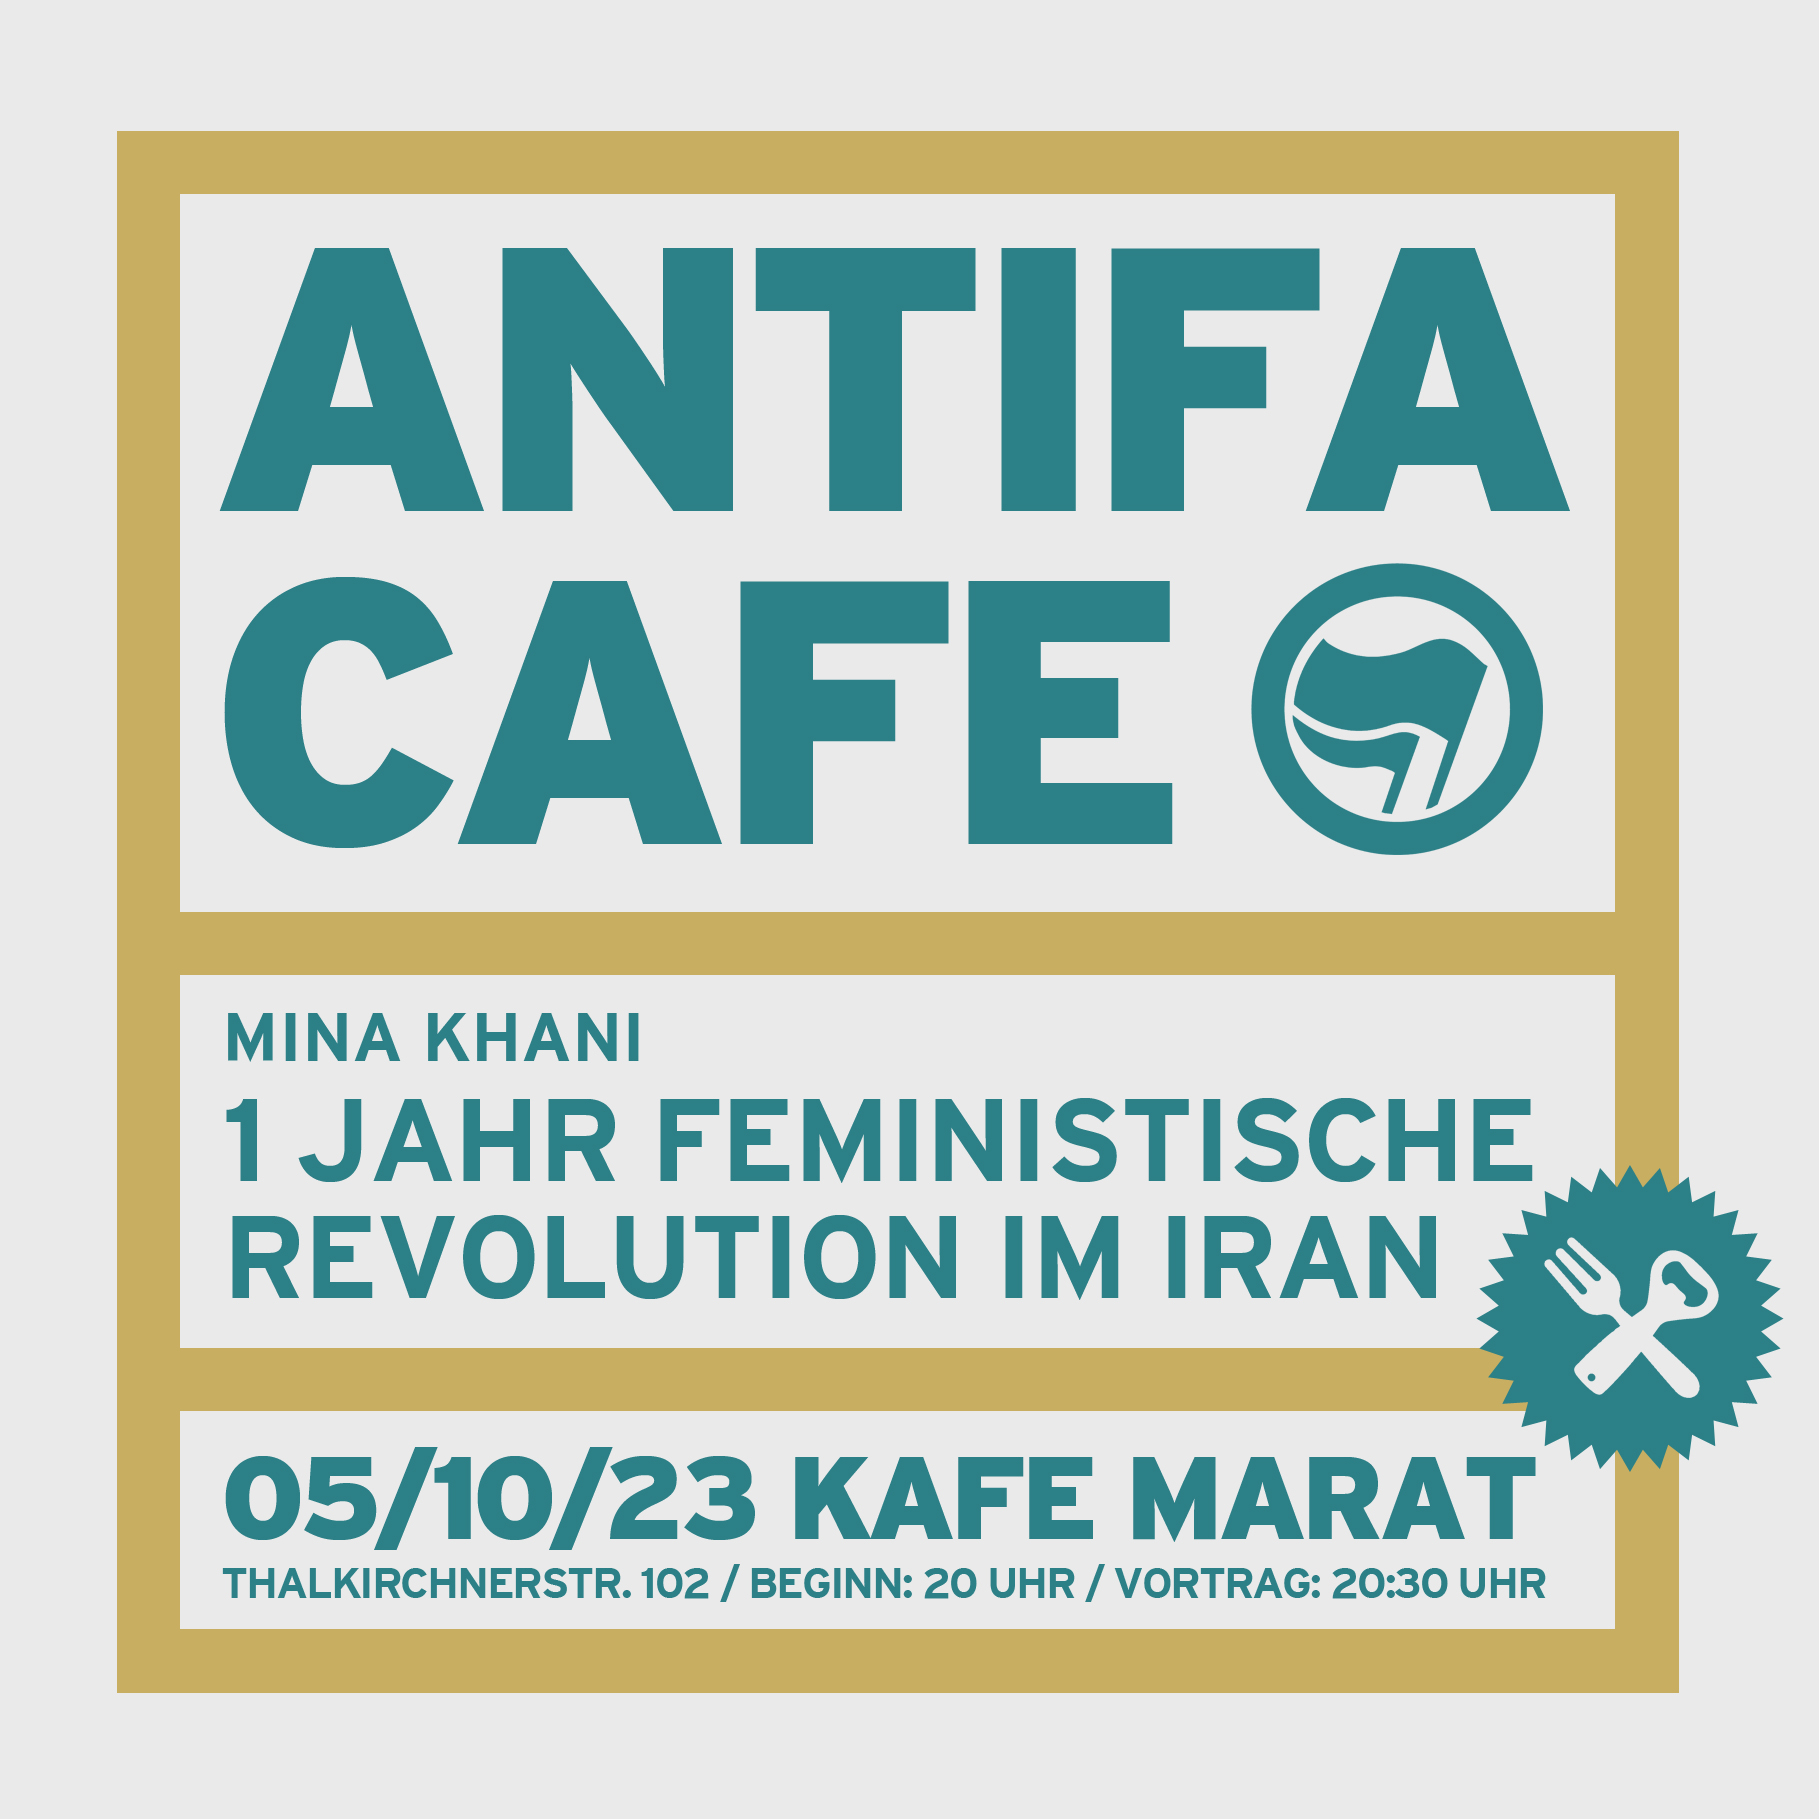 Antifa-Café: 1 Jahr feministische Revolution im Iran (Mina Khani)